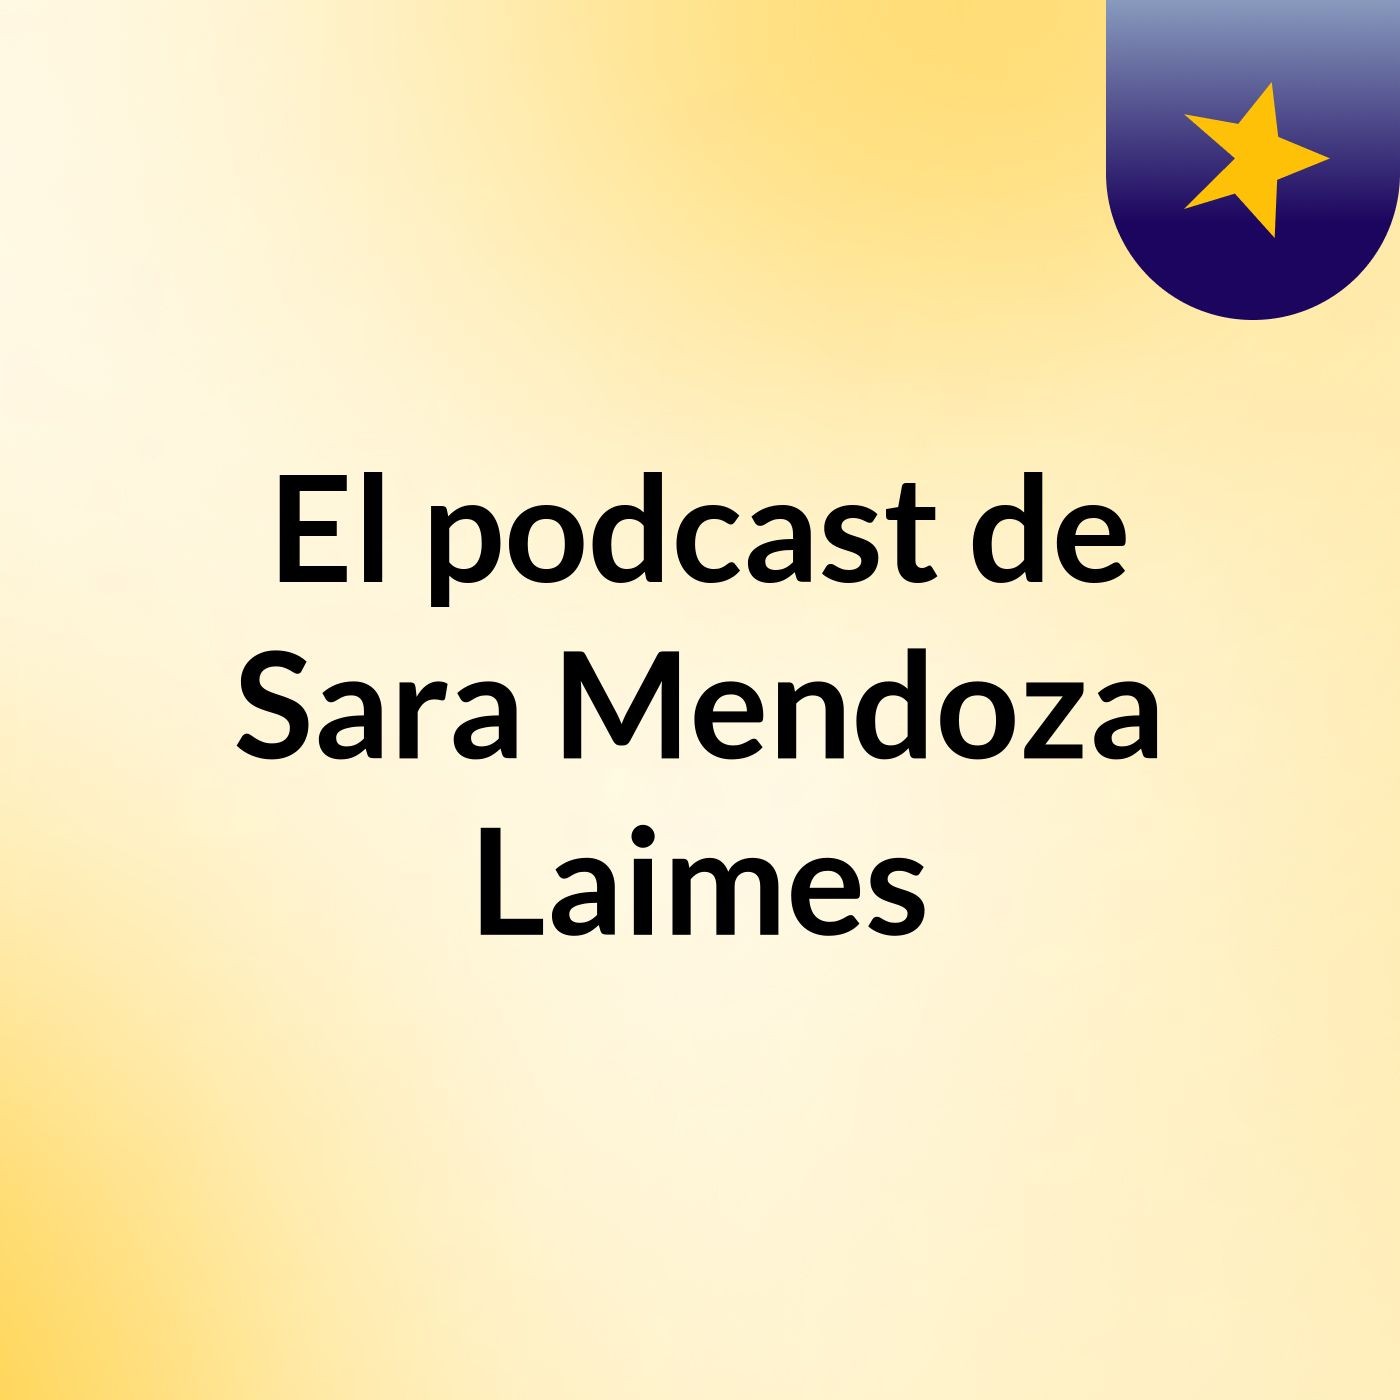 El podcast de Sara Mendoza Laimes